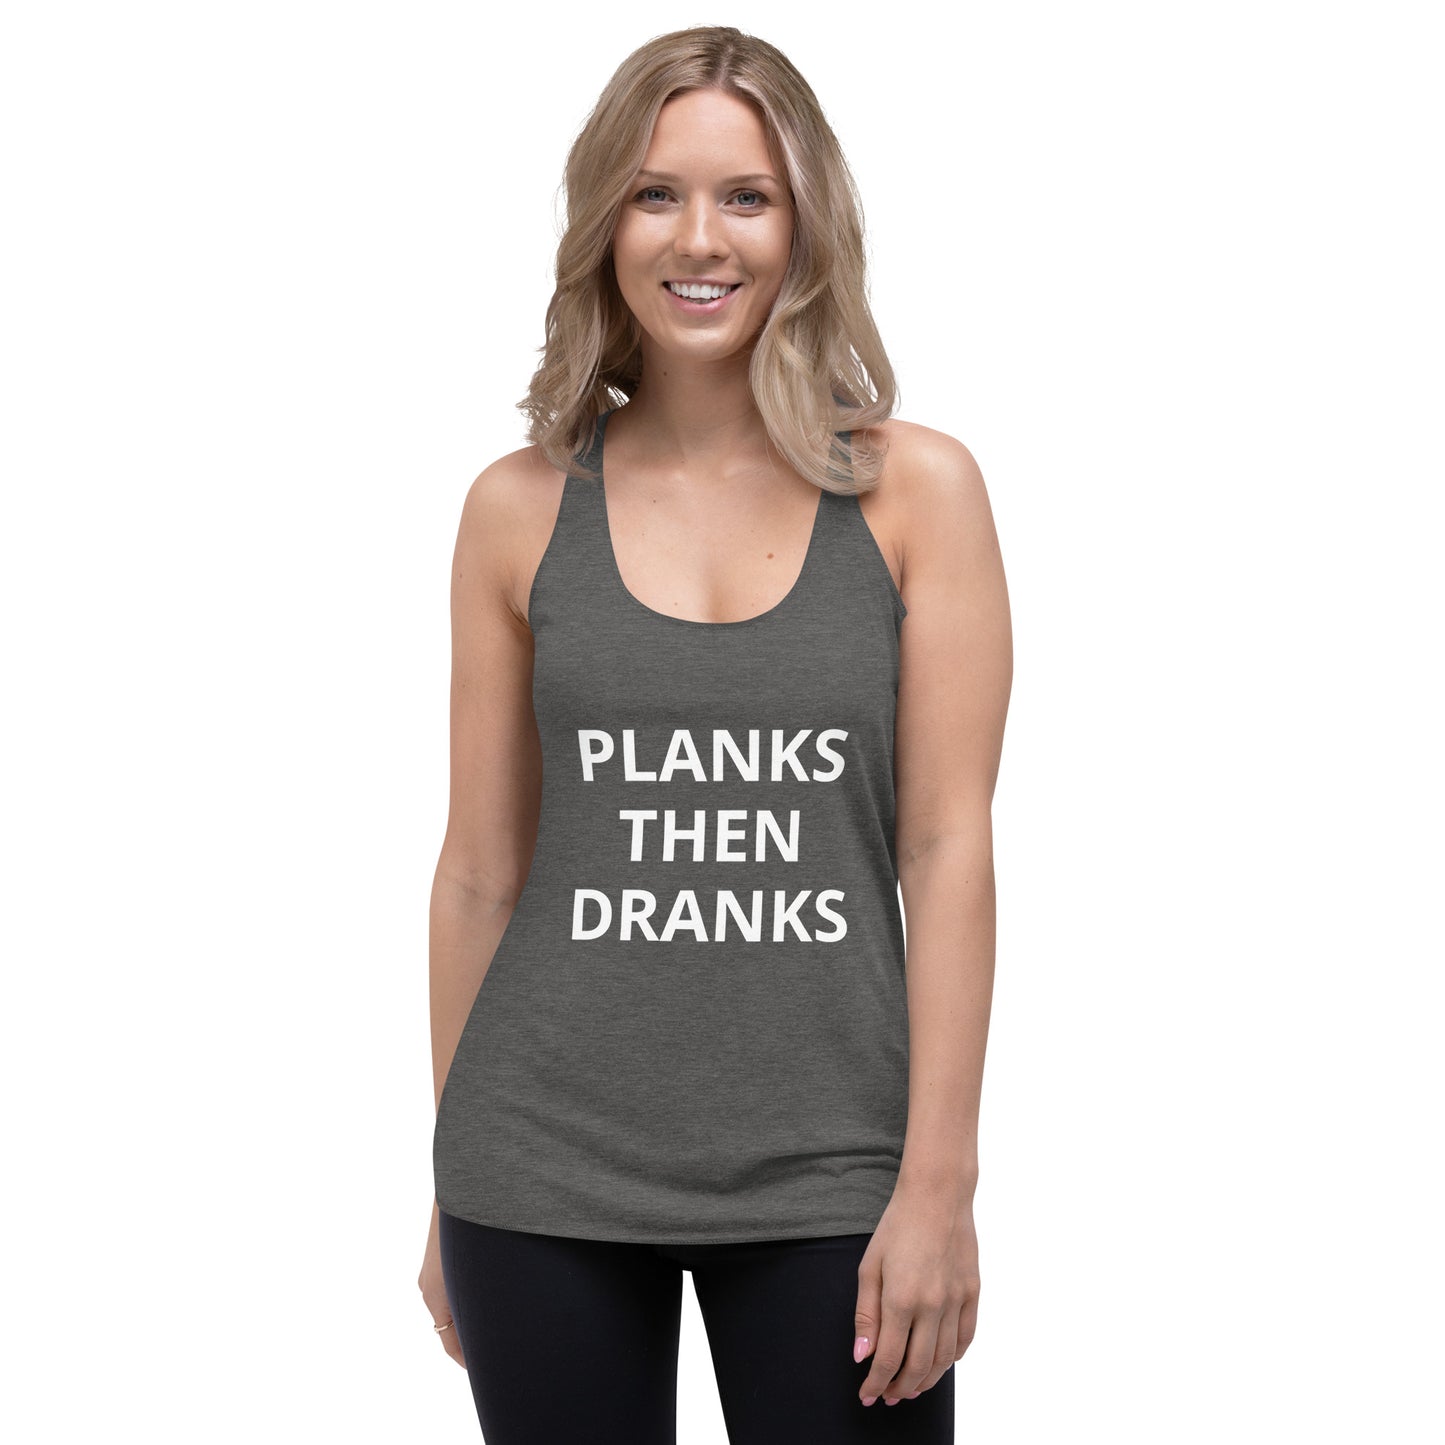 Women's Racerback Tank "planks and dranks"